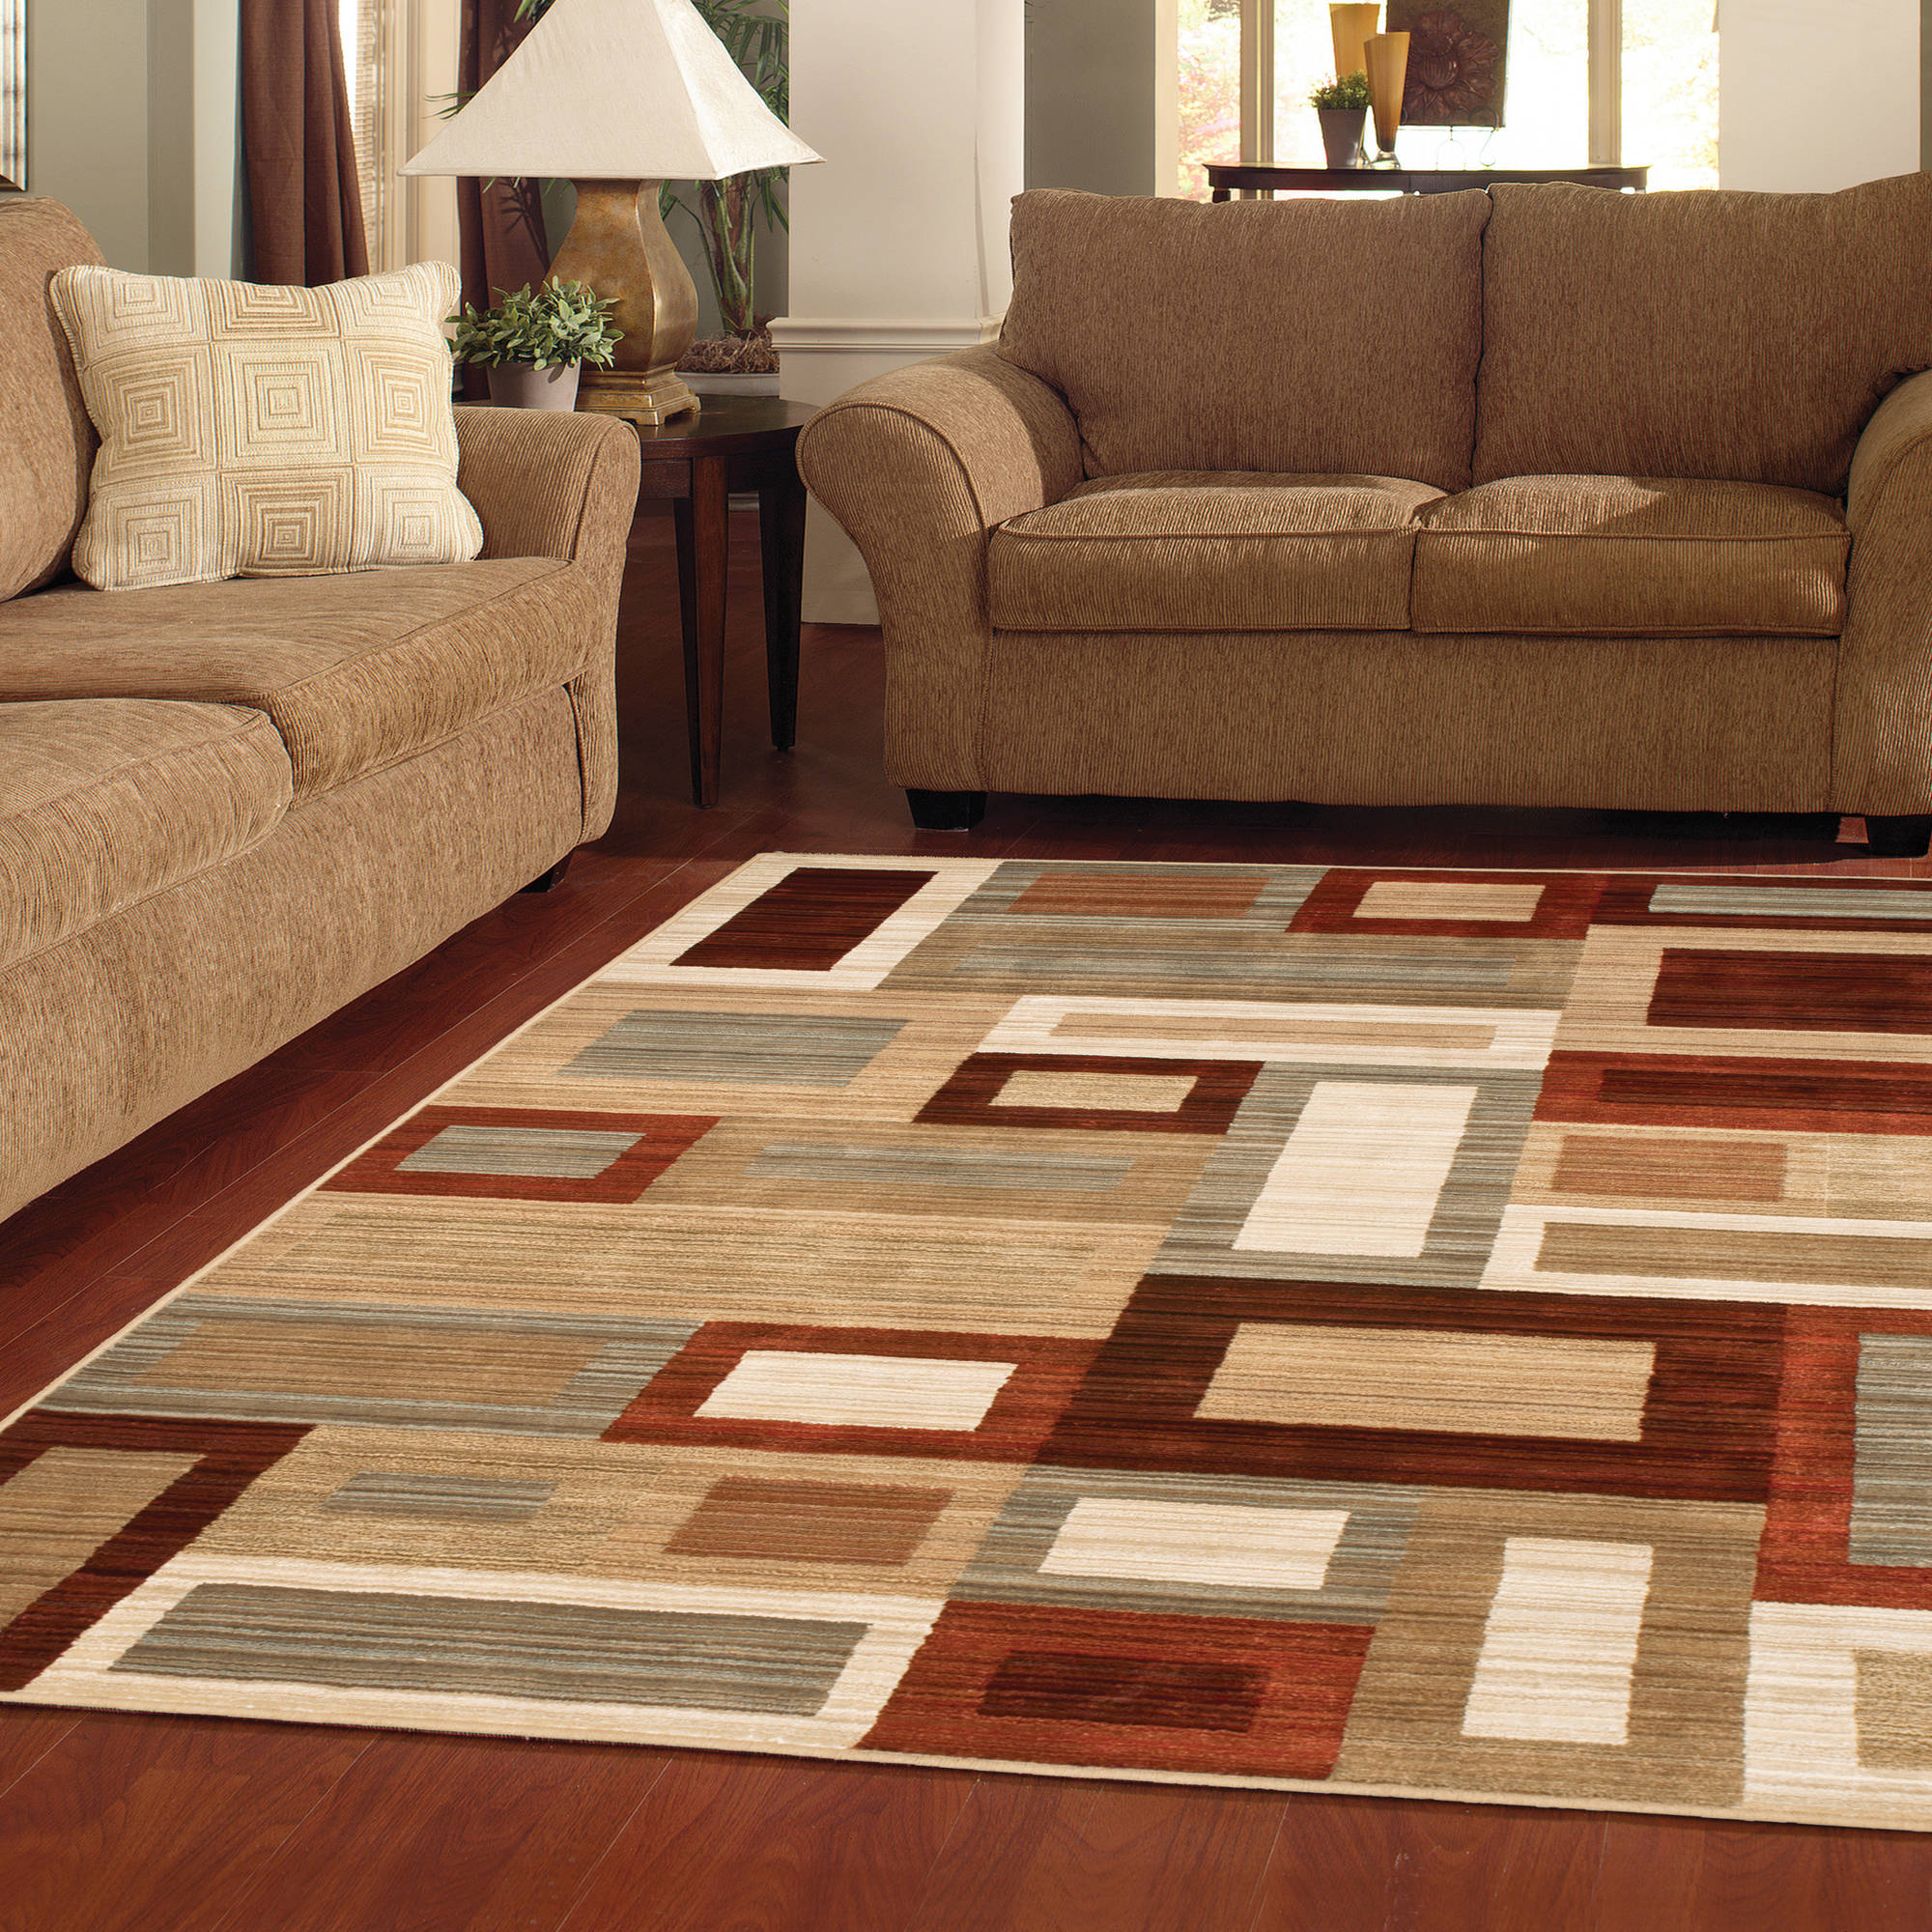 10 Benefits Of Having Carpet For Living Room Hawk Haven